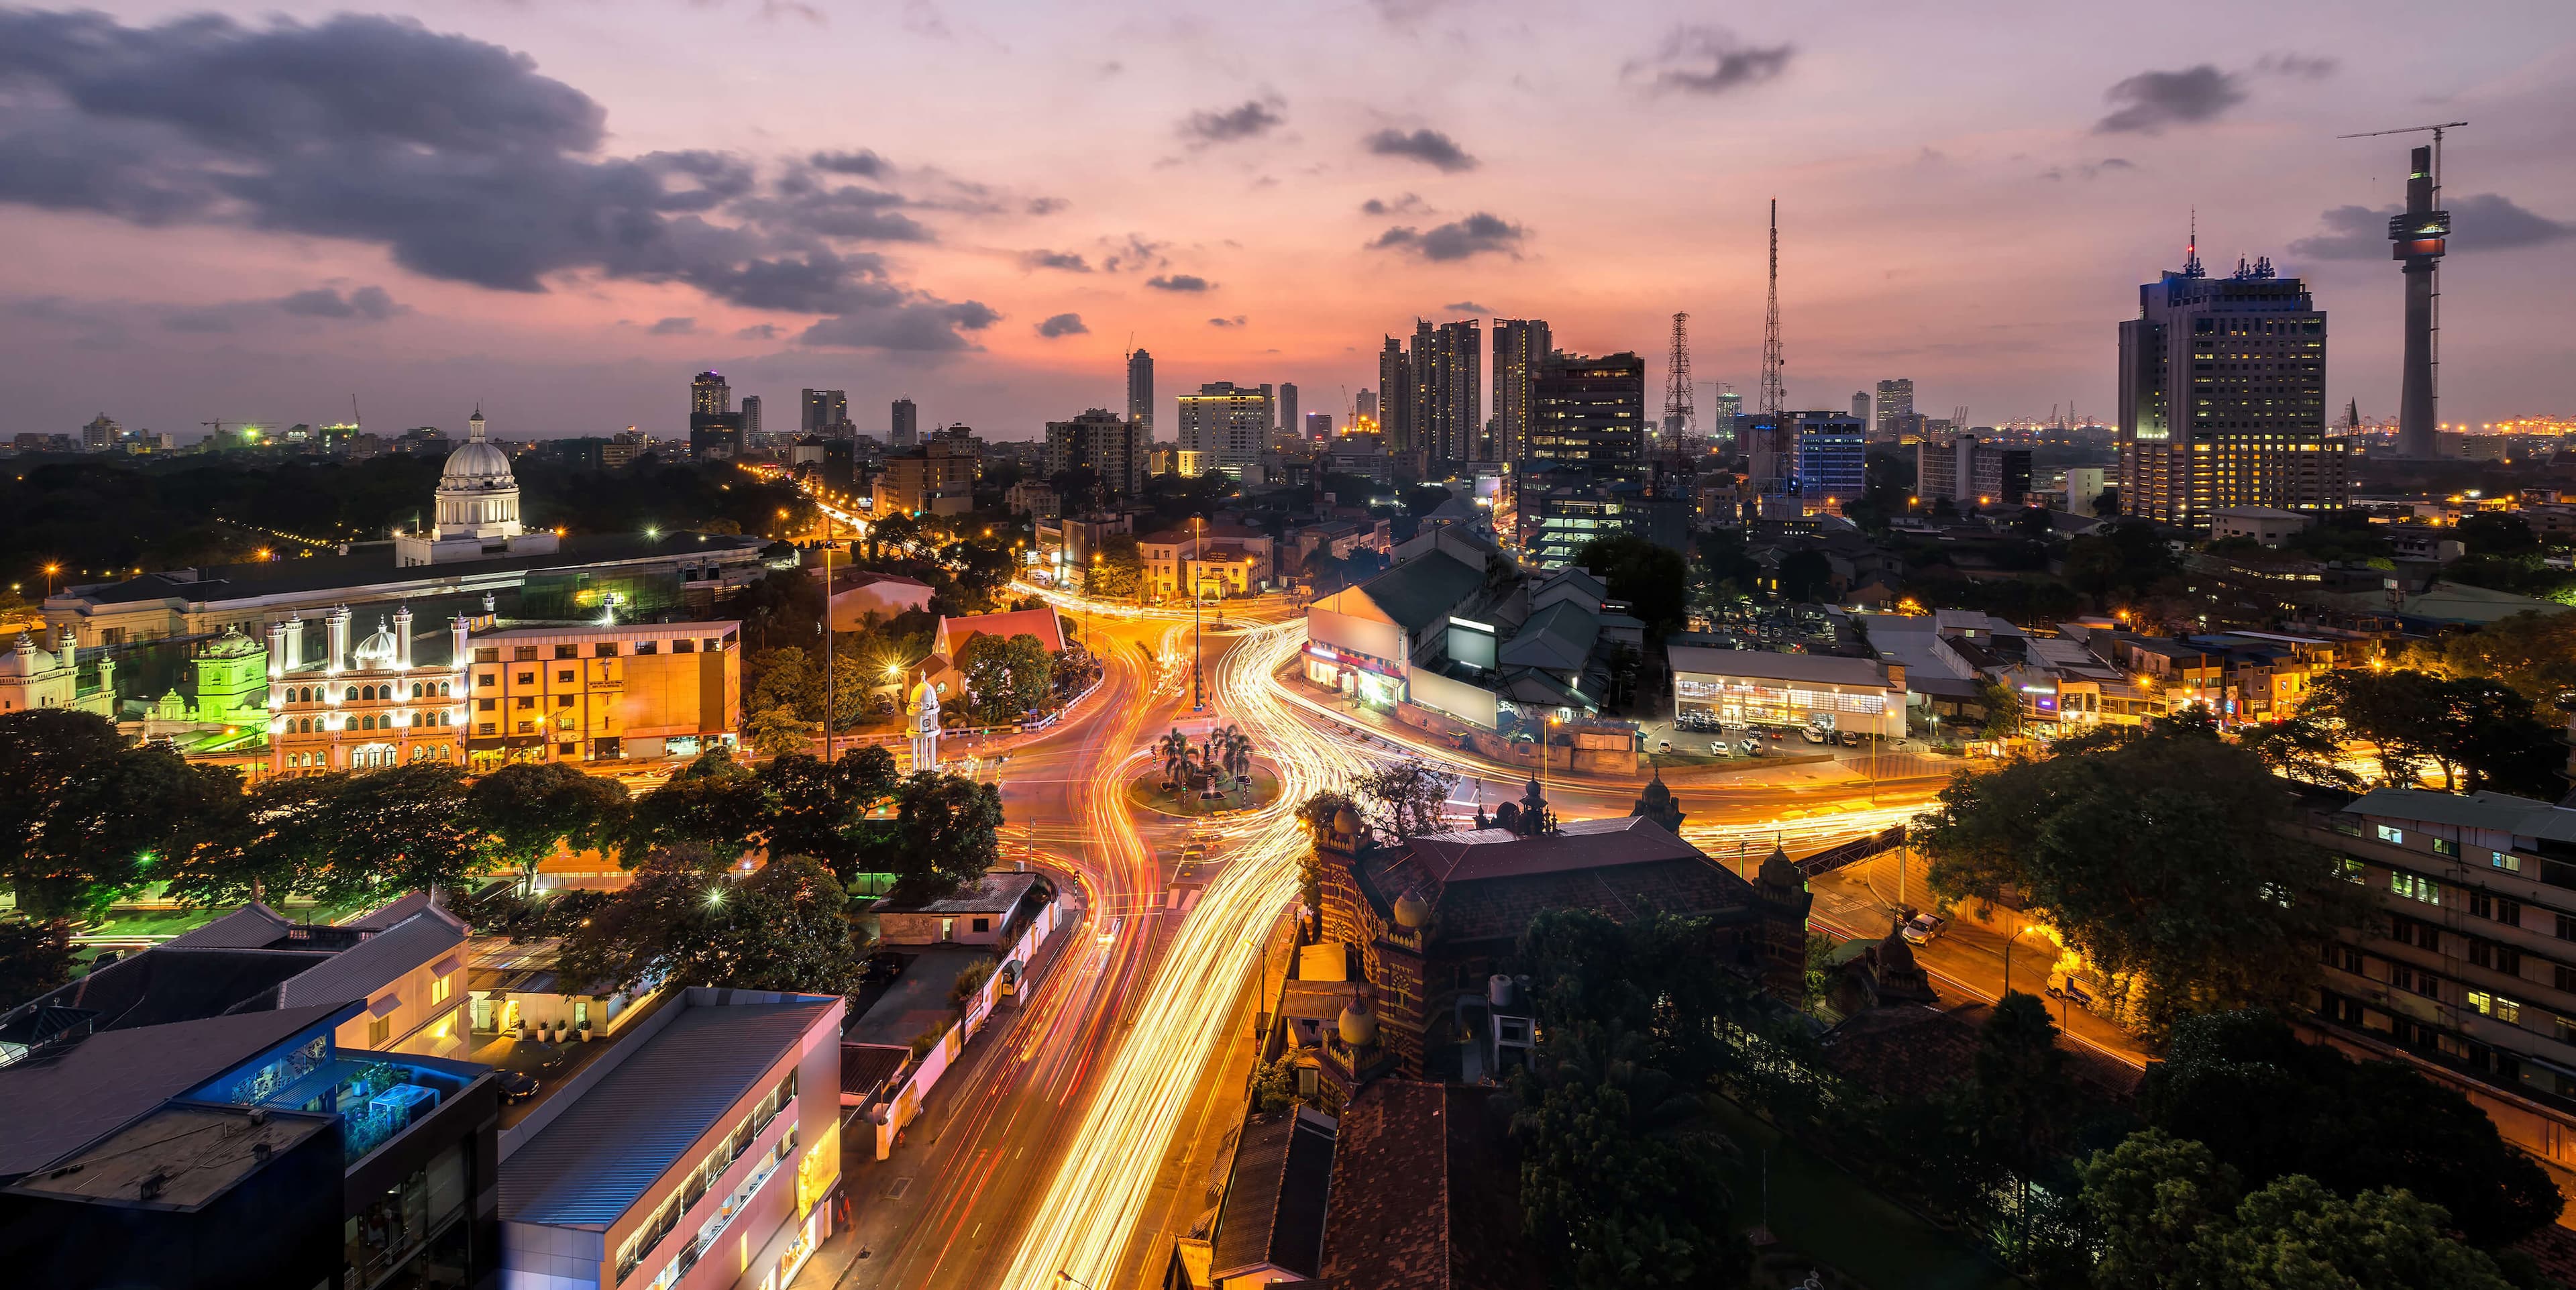 Vista nocturna de la ciudad de Colombo, Sri Lanka.